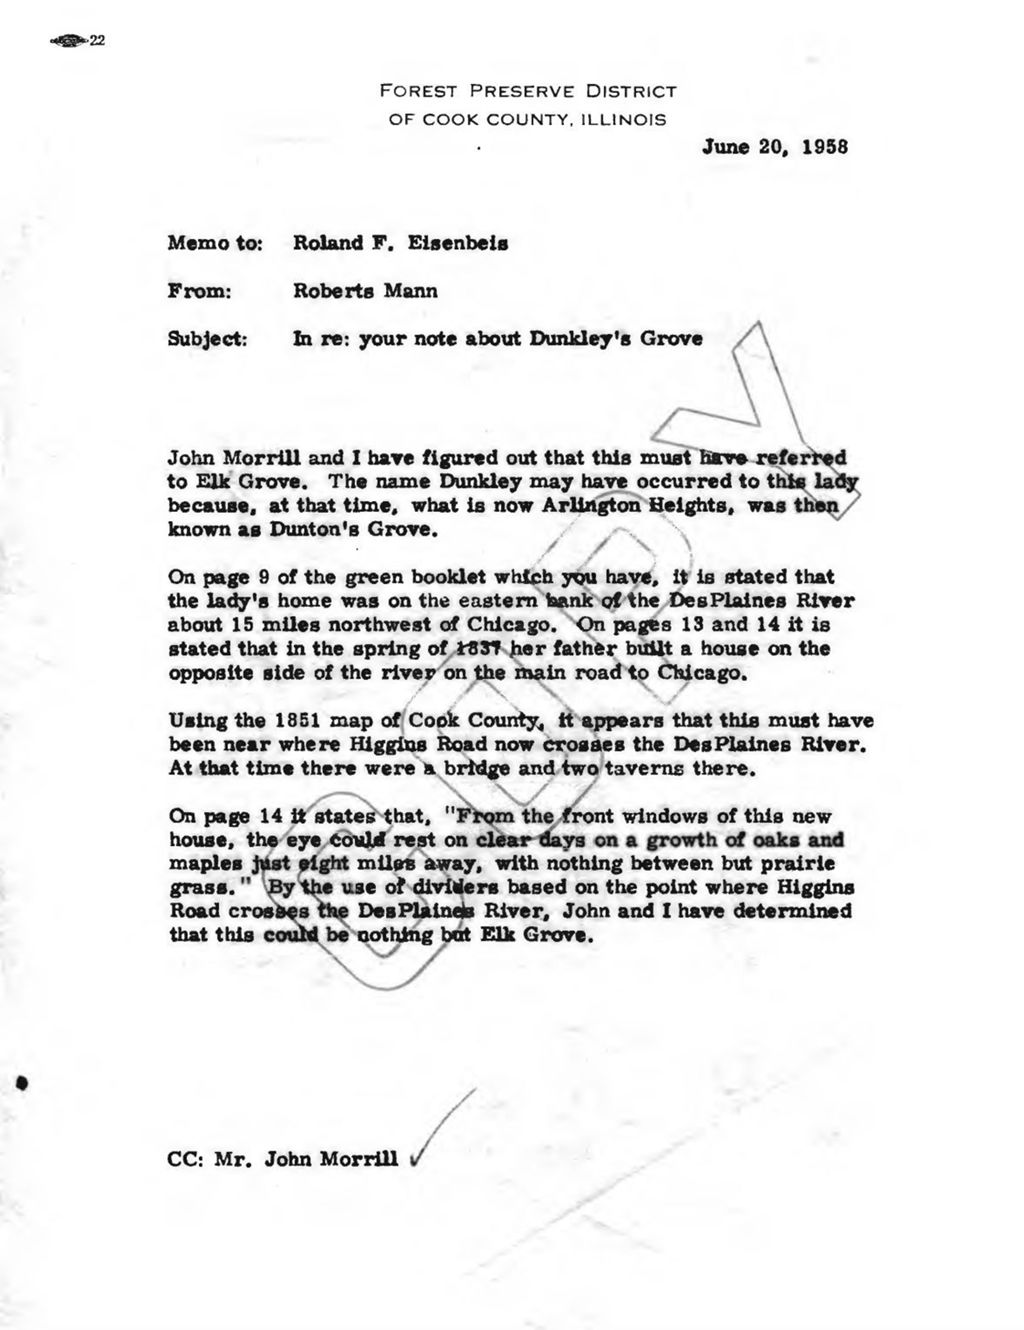 Correspondence regarding Dunkley's Grove and Robinson Family Cemetery, 1958